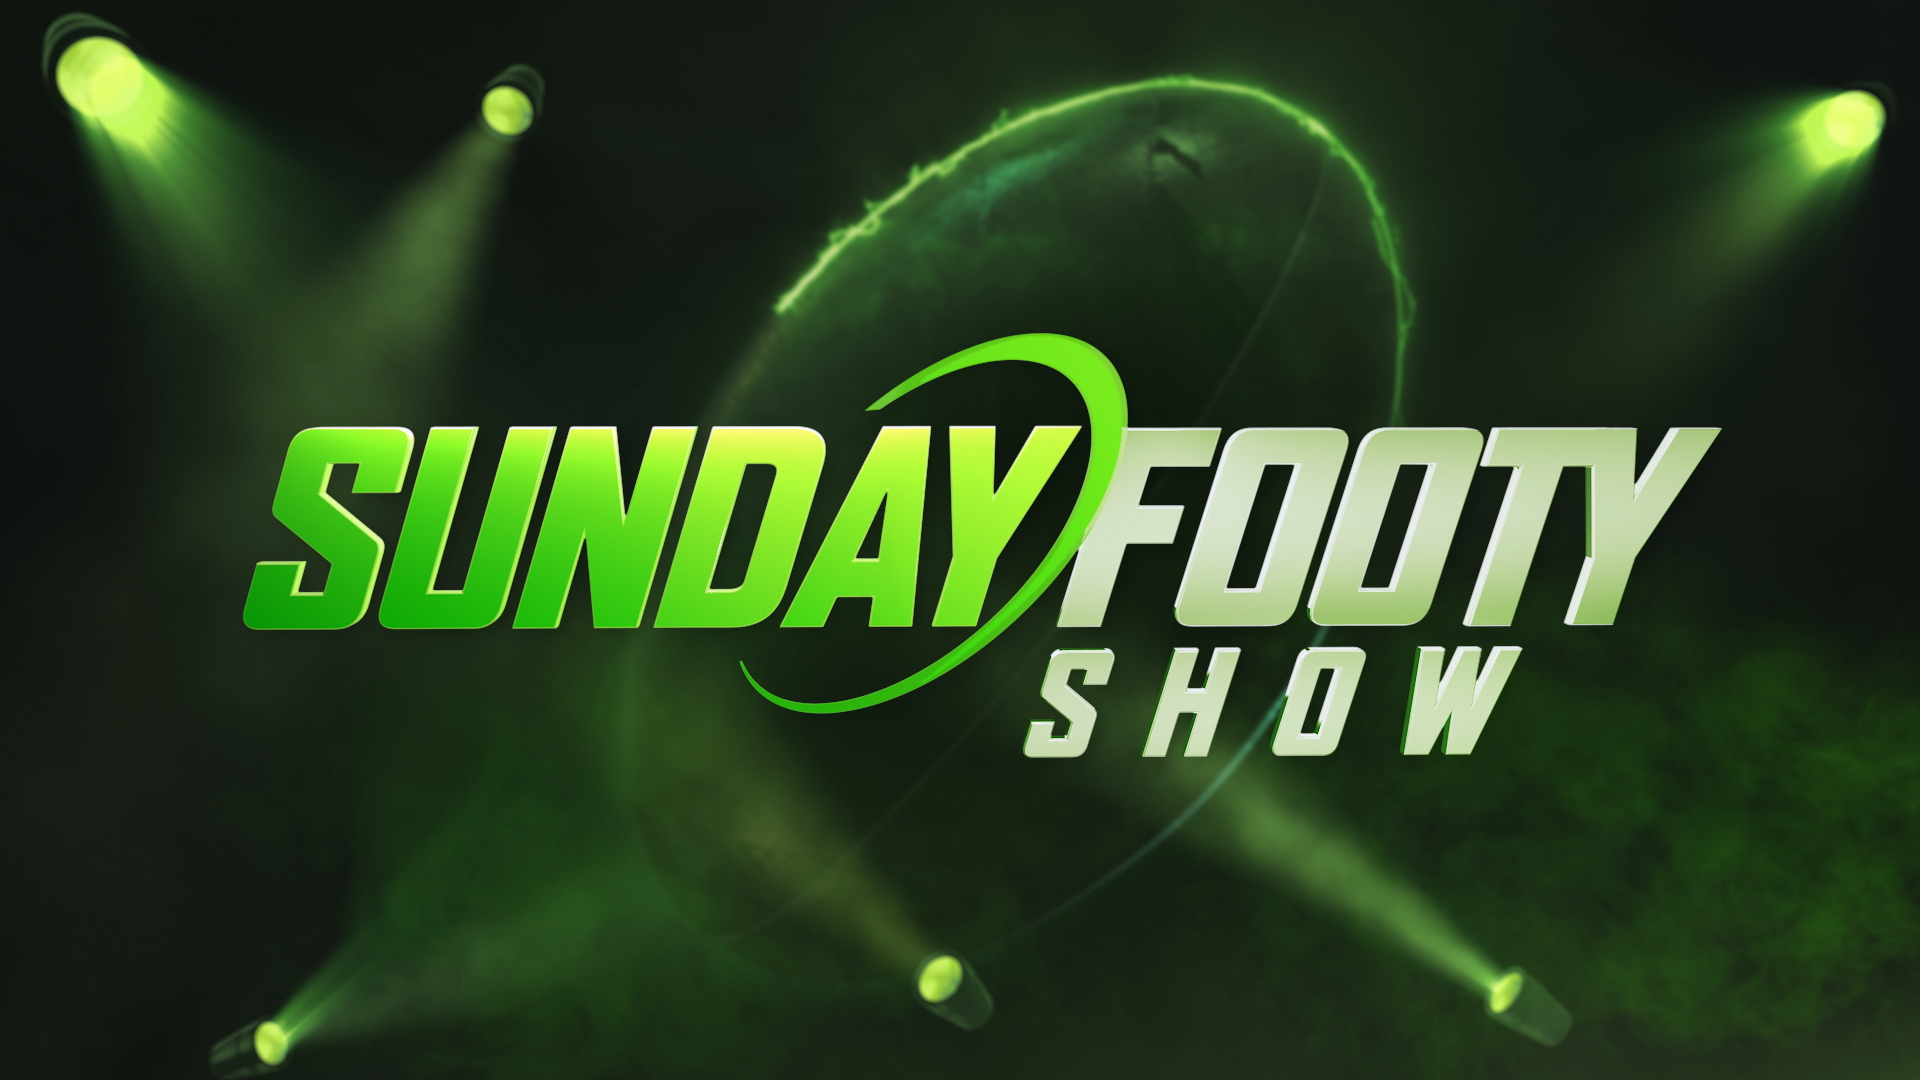 Sunday Footy Show (NRL)